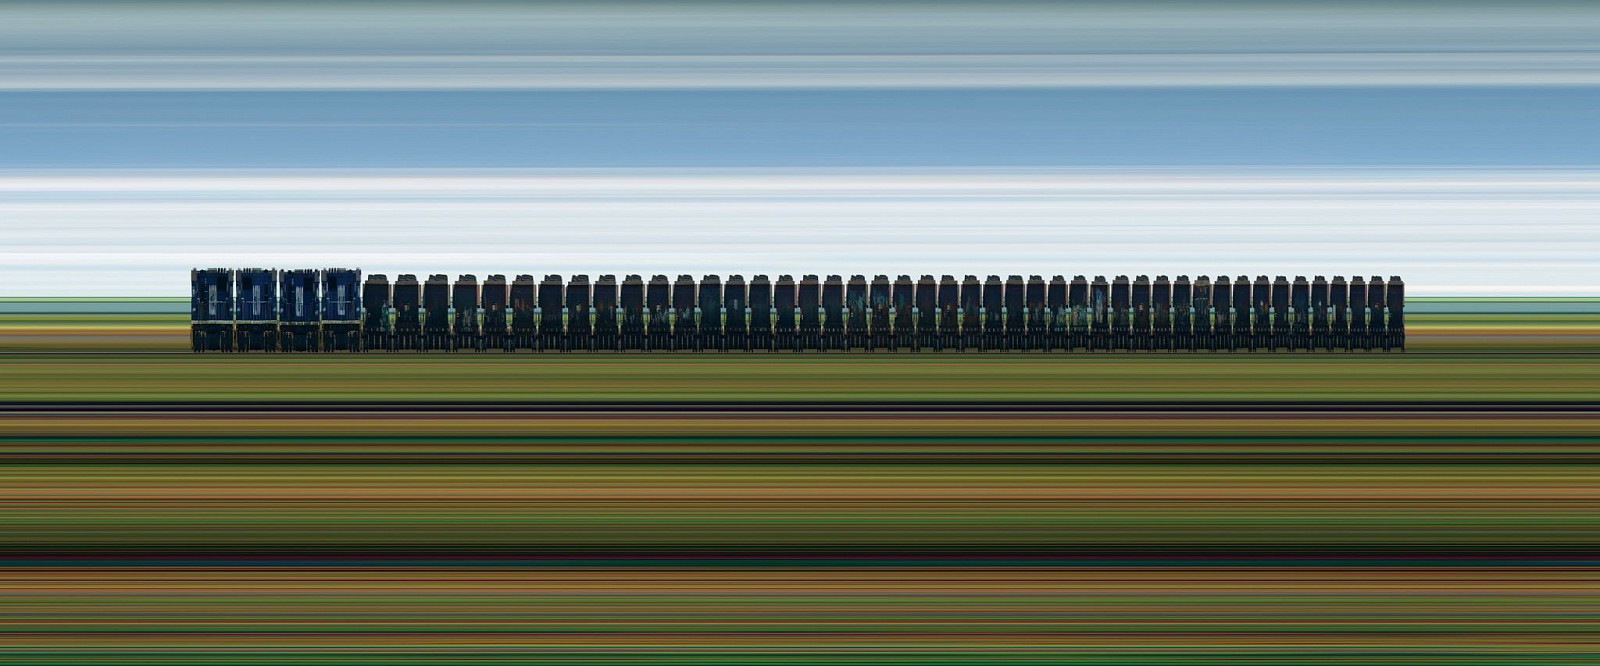 Jay Mark Johnson, HUNTER VALLEY #02, 2012 Australia
archival pigment on paper, mounted on aluminum, 40 x 88 in. (101.6 x 223.5 cm)